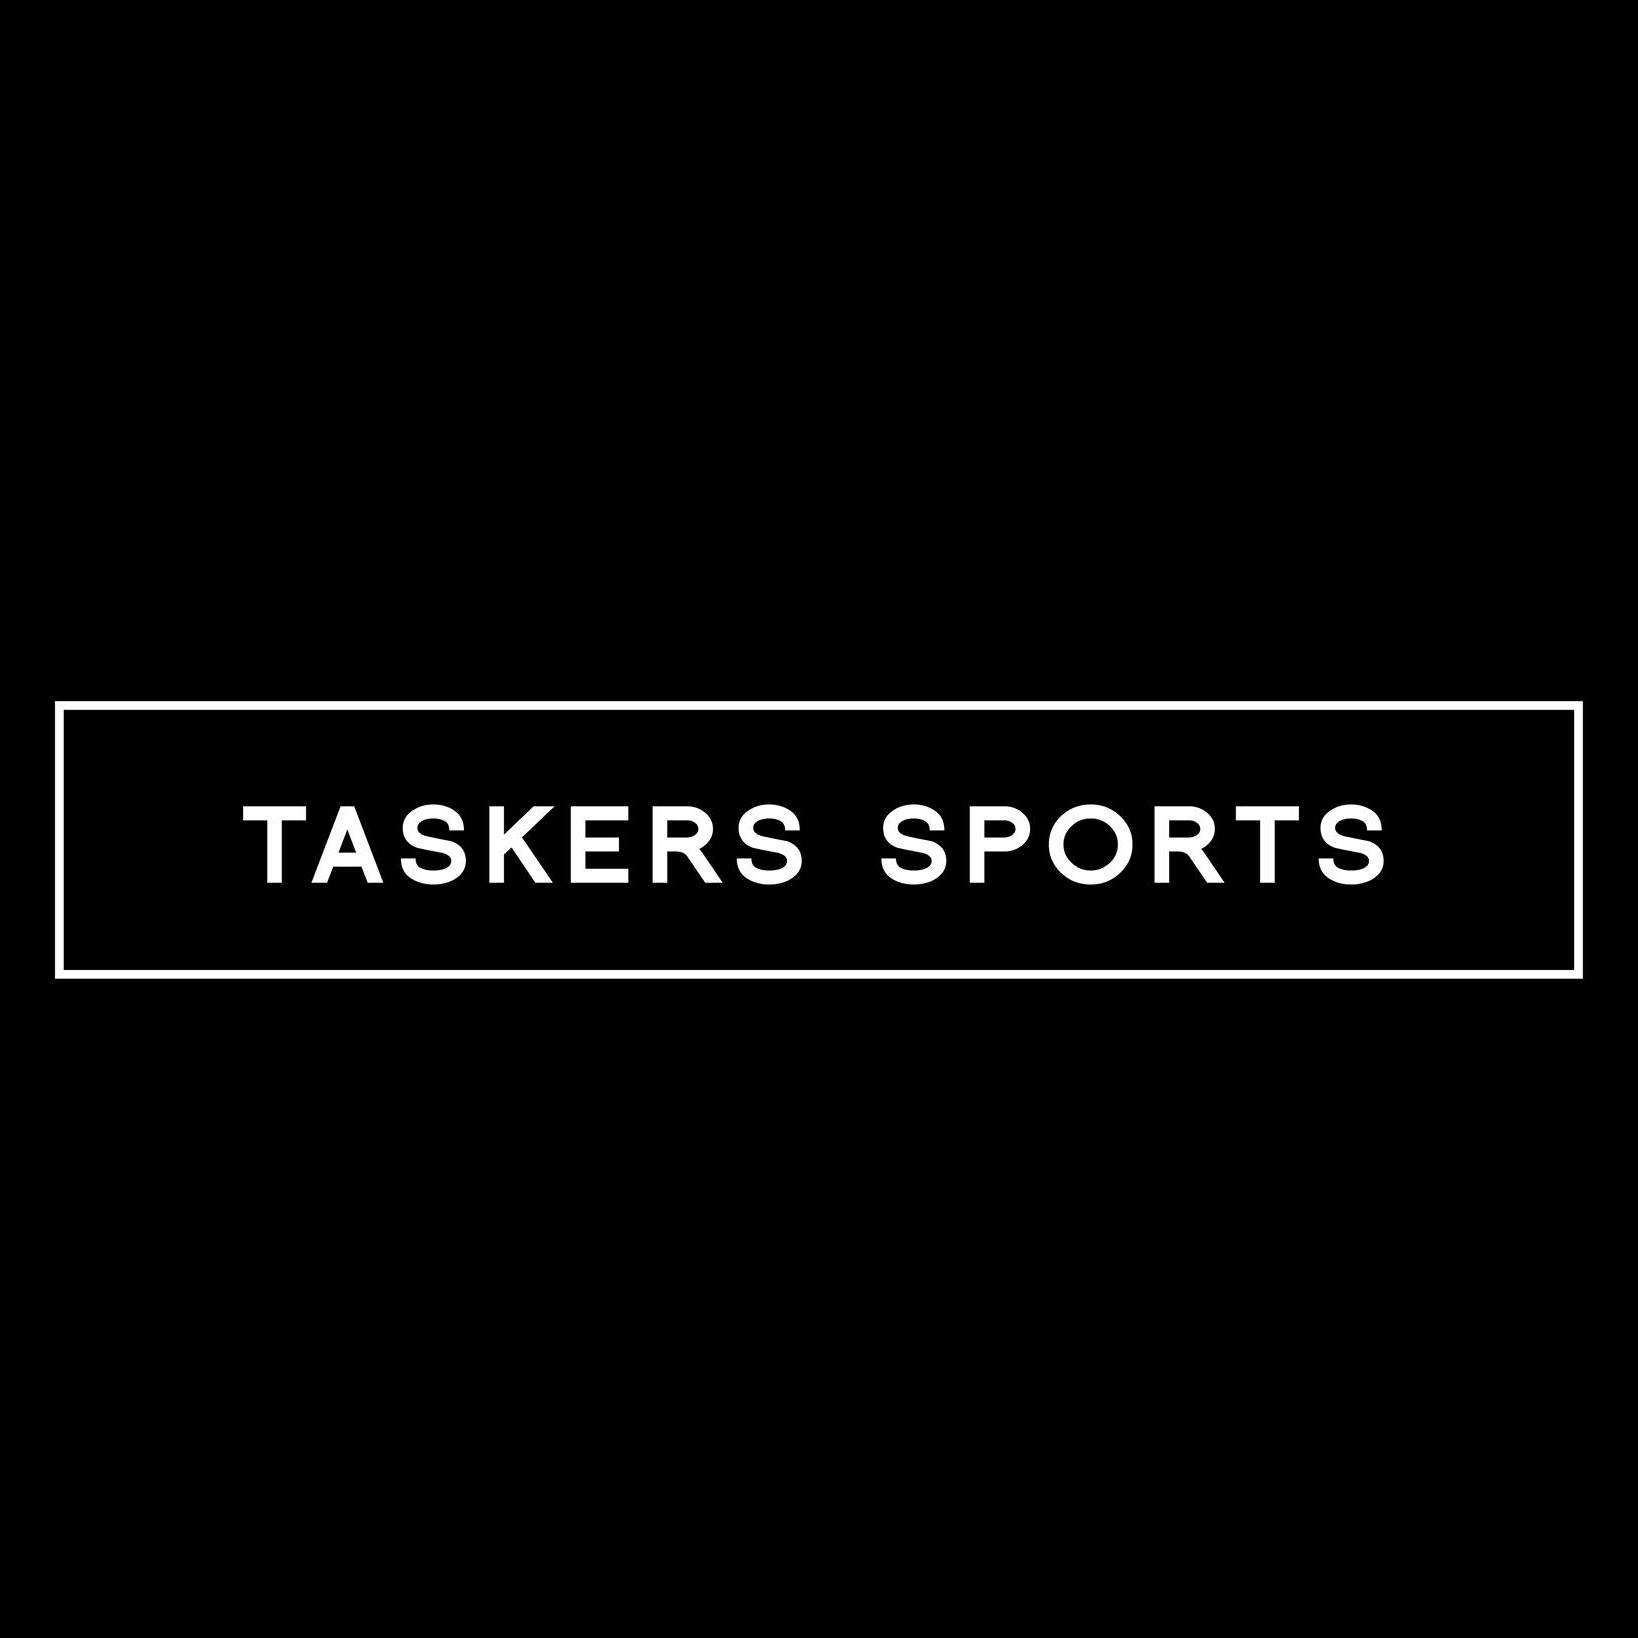 rod Installation vejspærring Taskers Sports - Crunchbase Company Profile & Funding